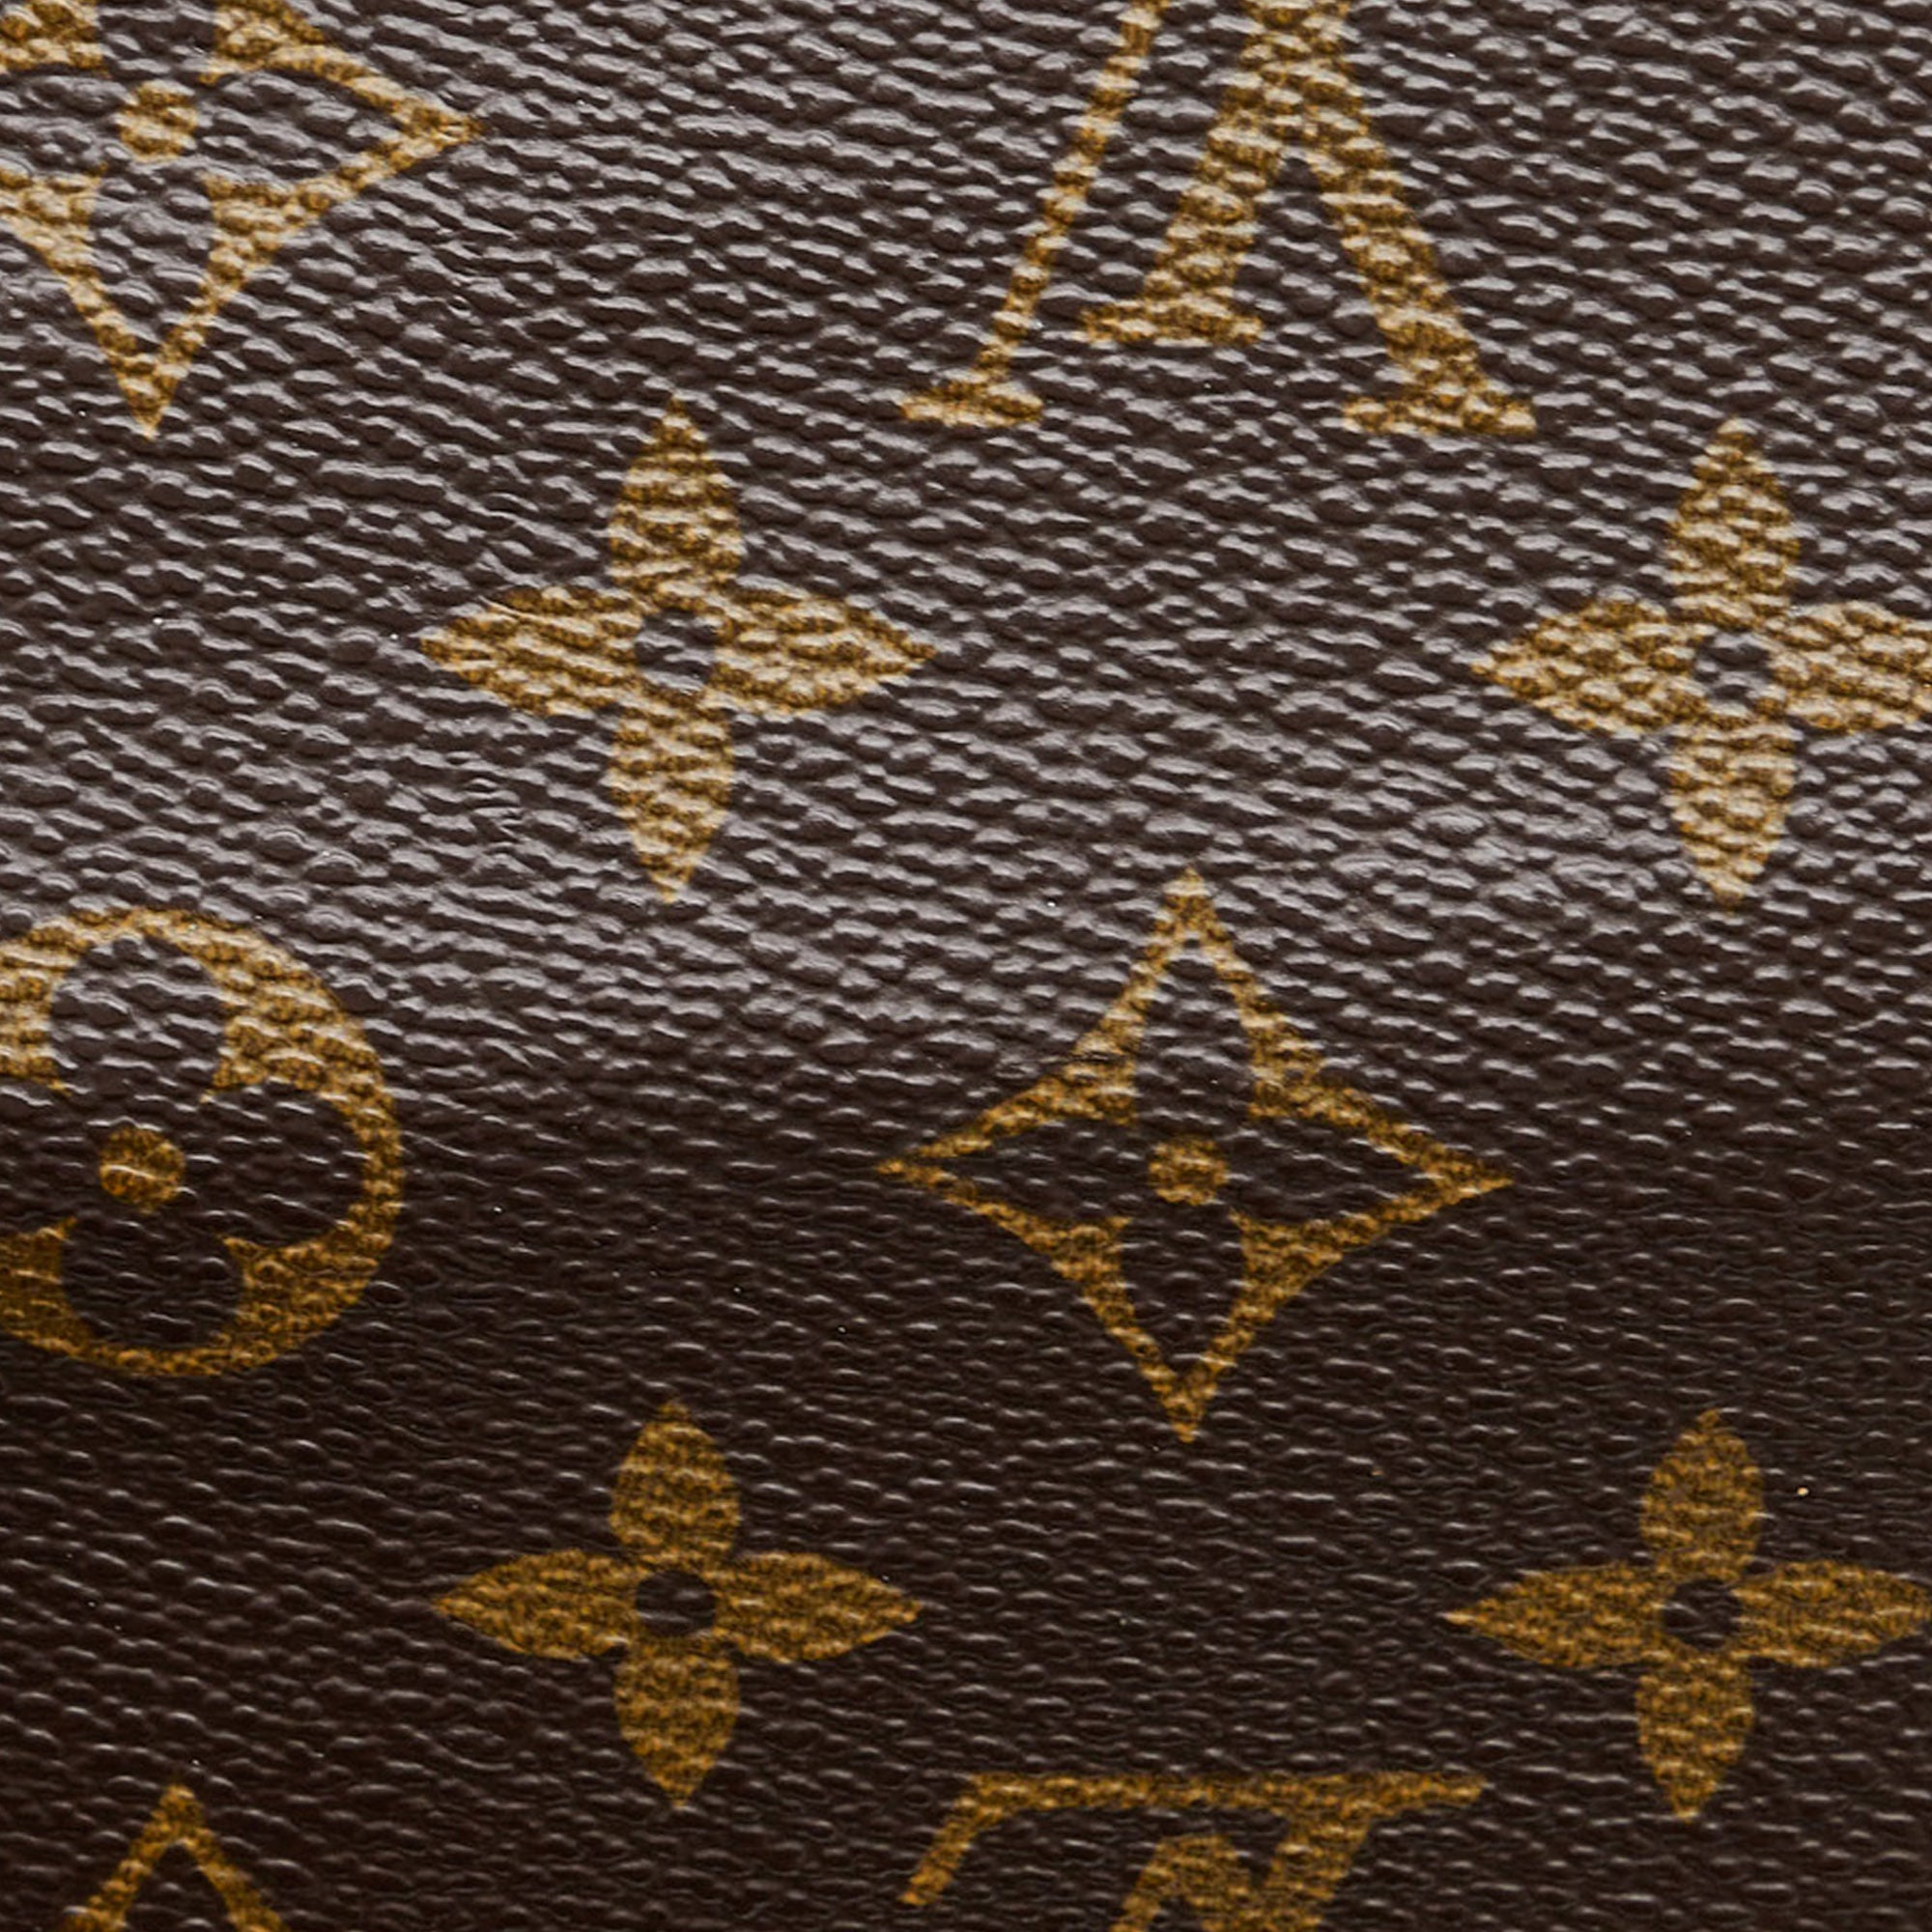 RvceShops Revival, Brown Louis Vuitton Monogram Keepall 55 Travel Bag